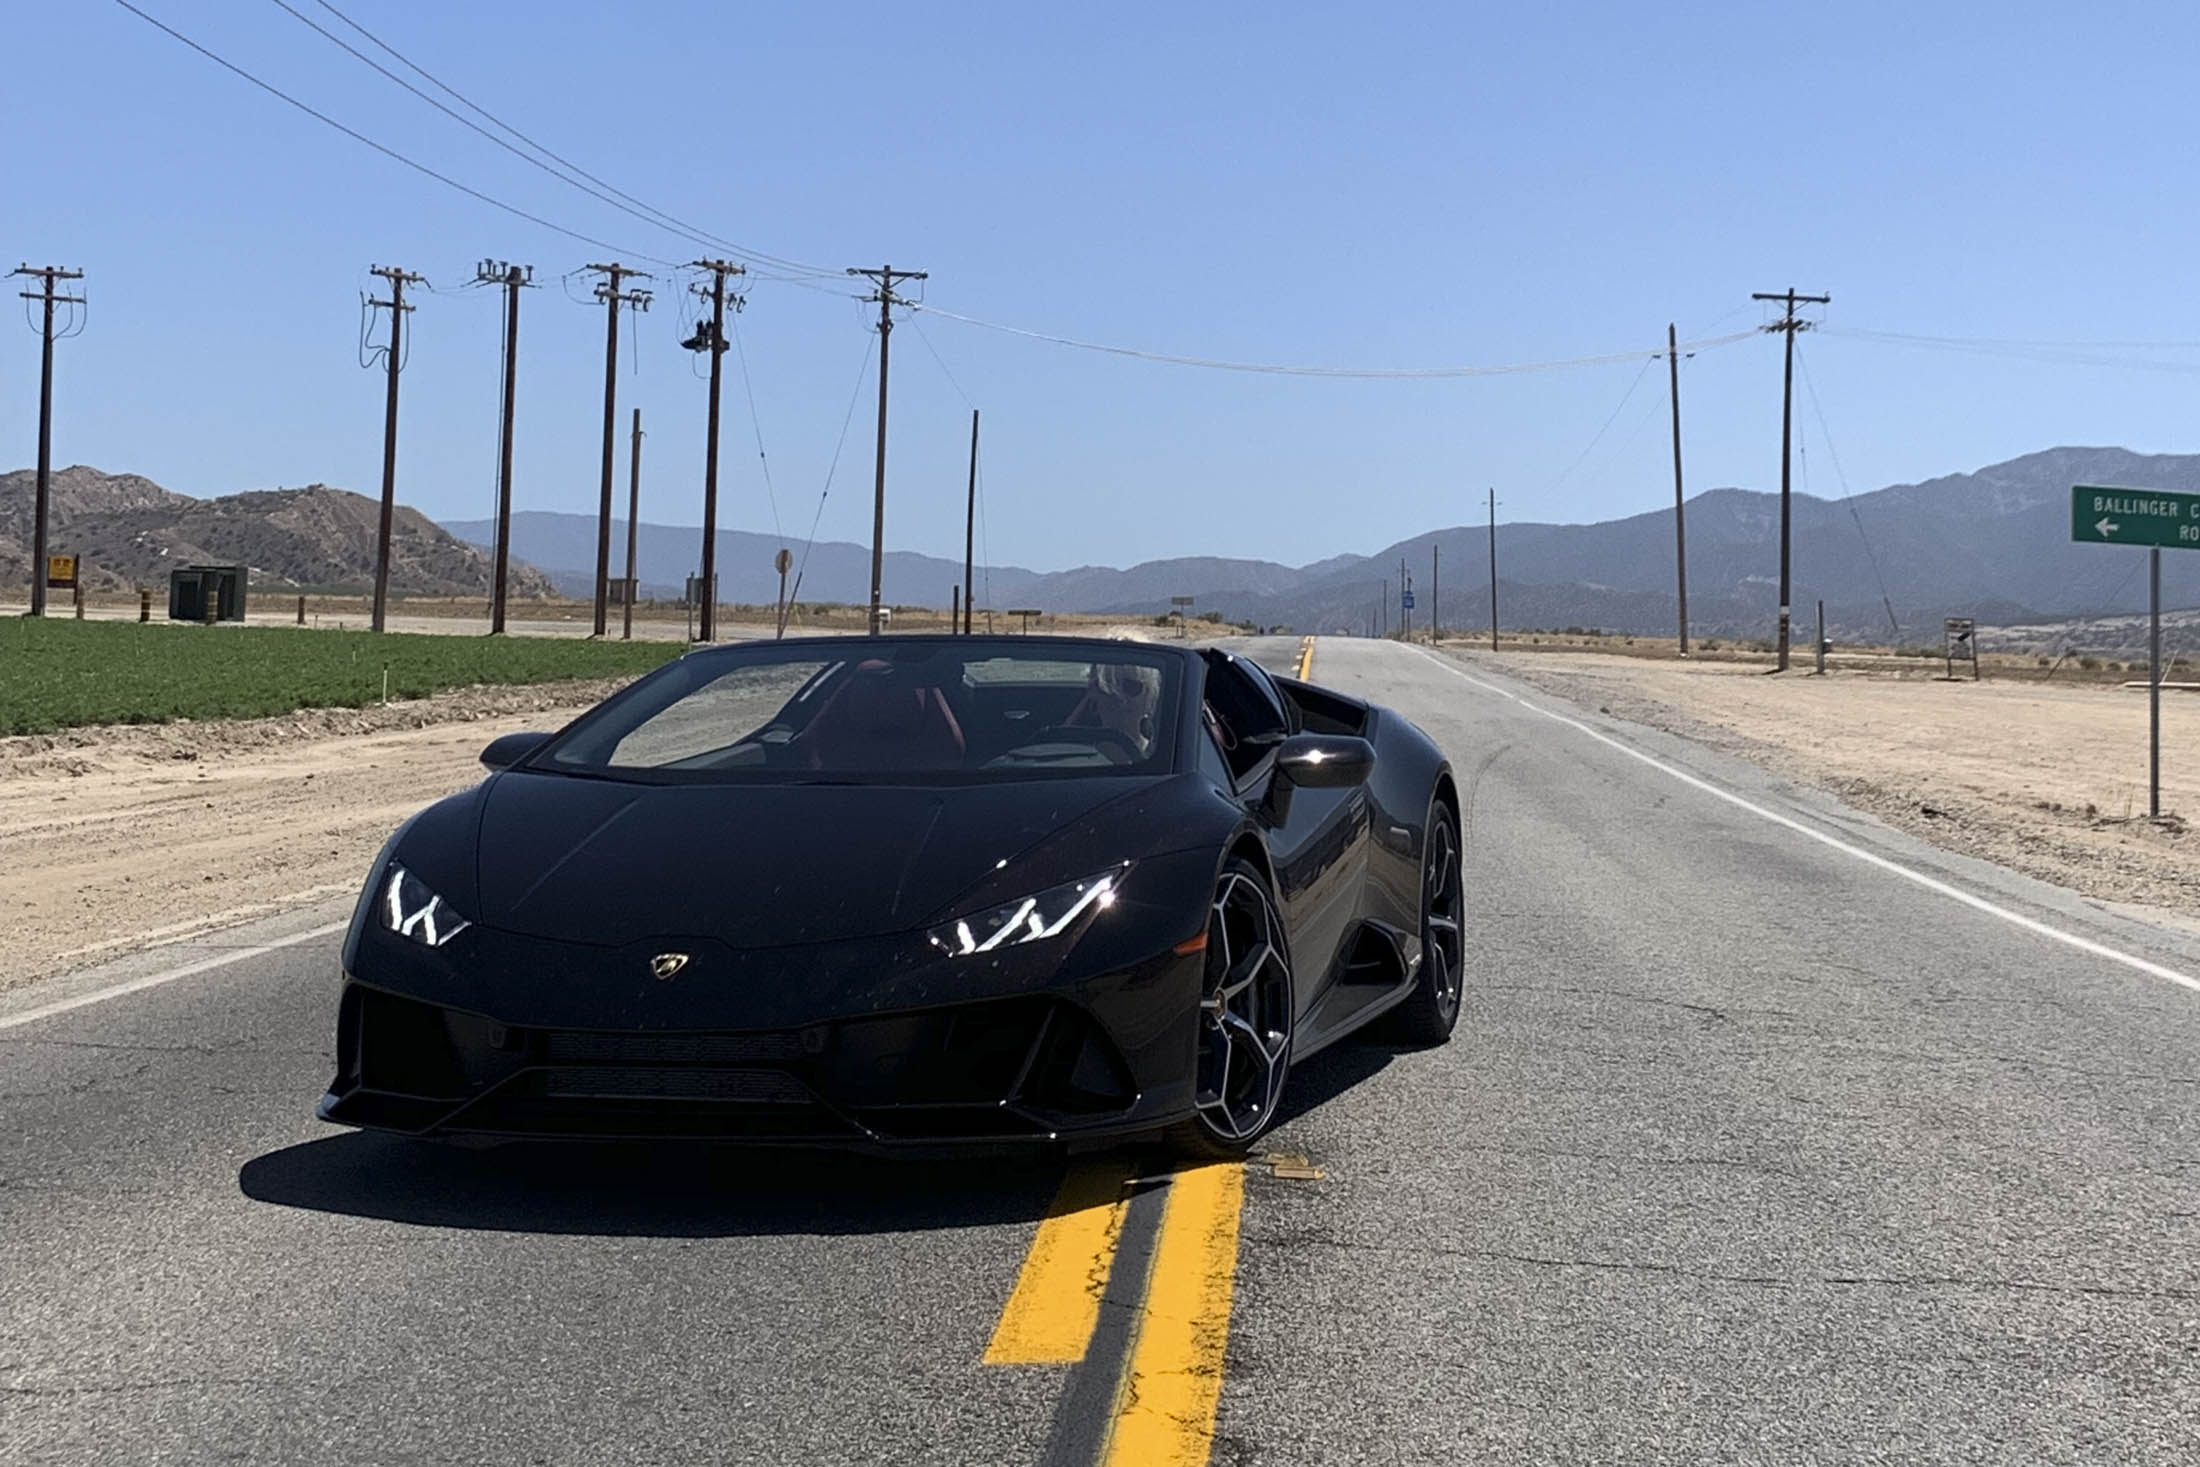 Lamborghini - Raw energy and extreme control on any